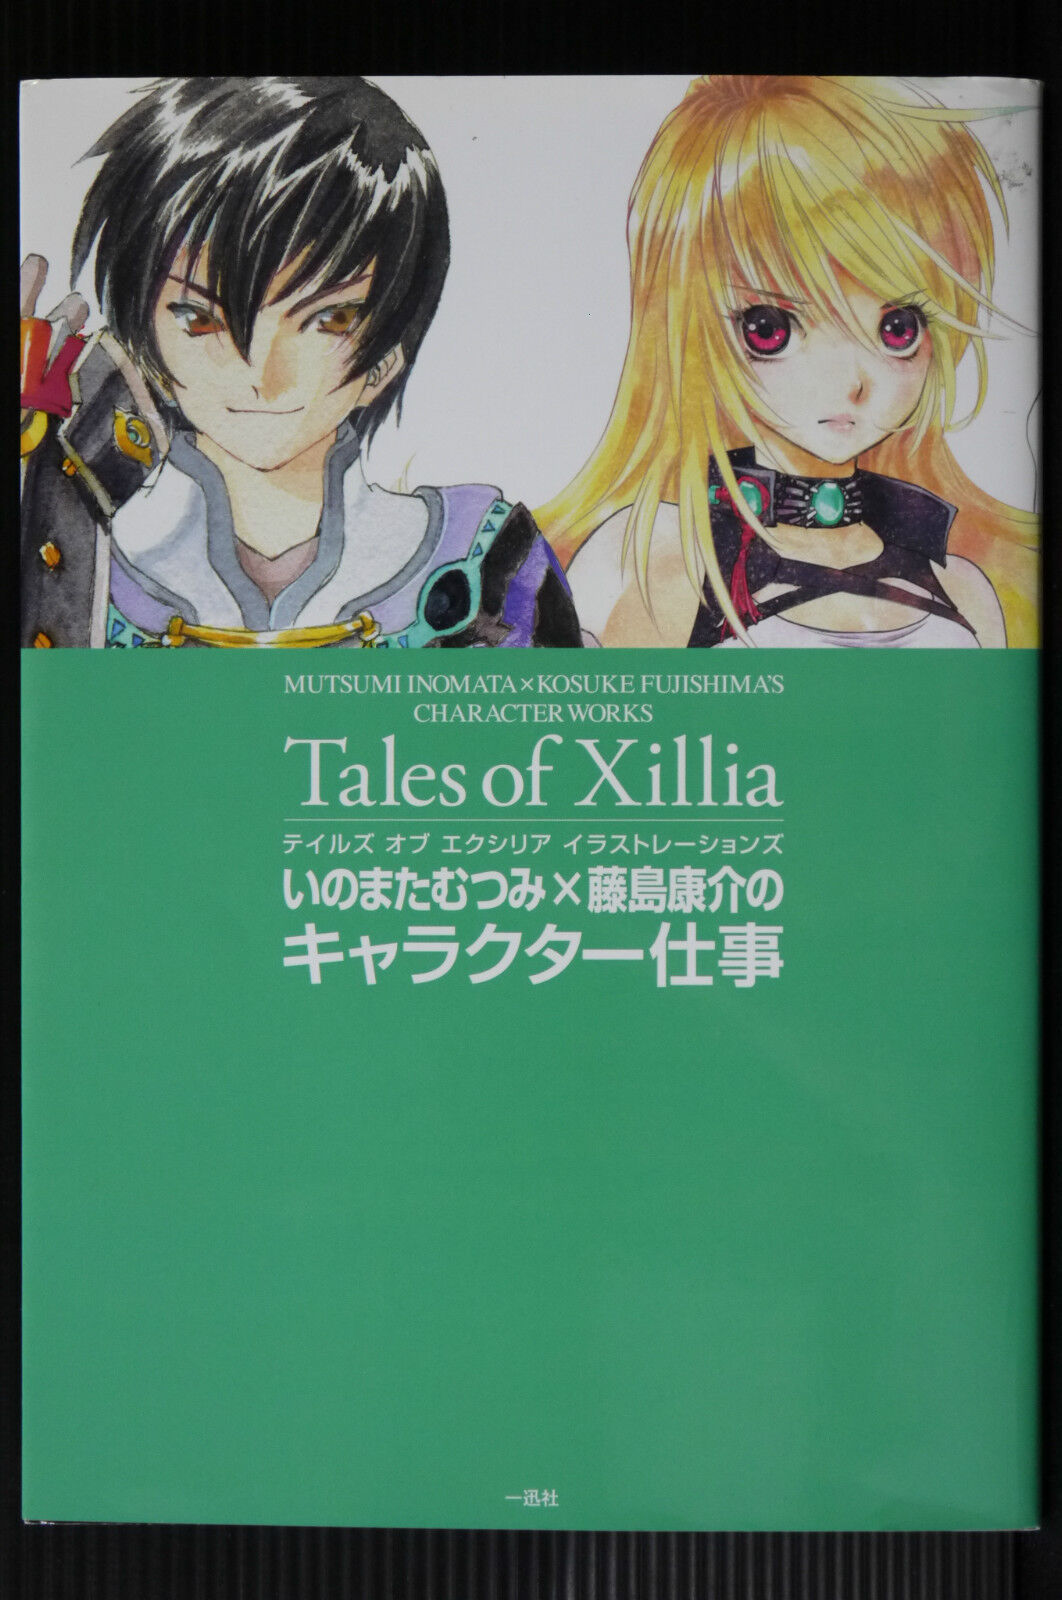 JAPAN Tales of Xillia Illustrations: Mutsumi Inomata & Kosuke Fujishima Art book